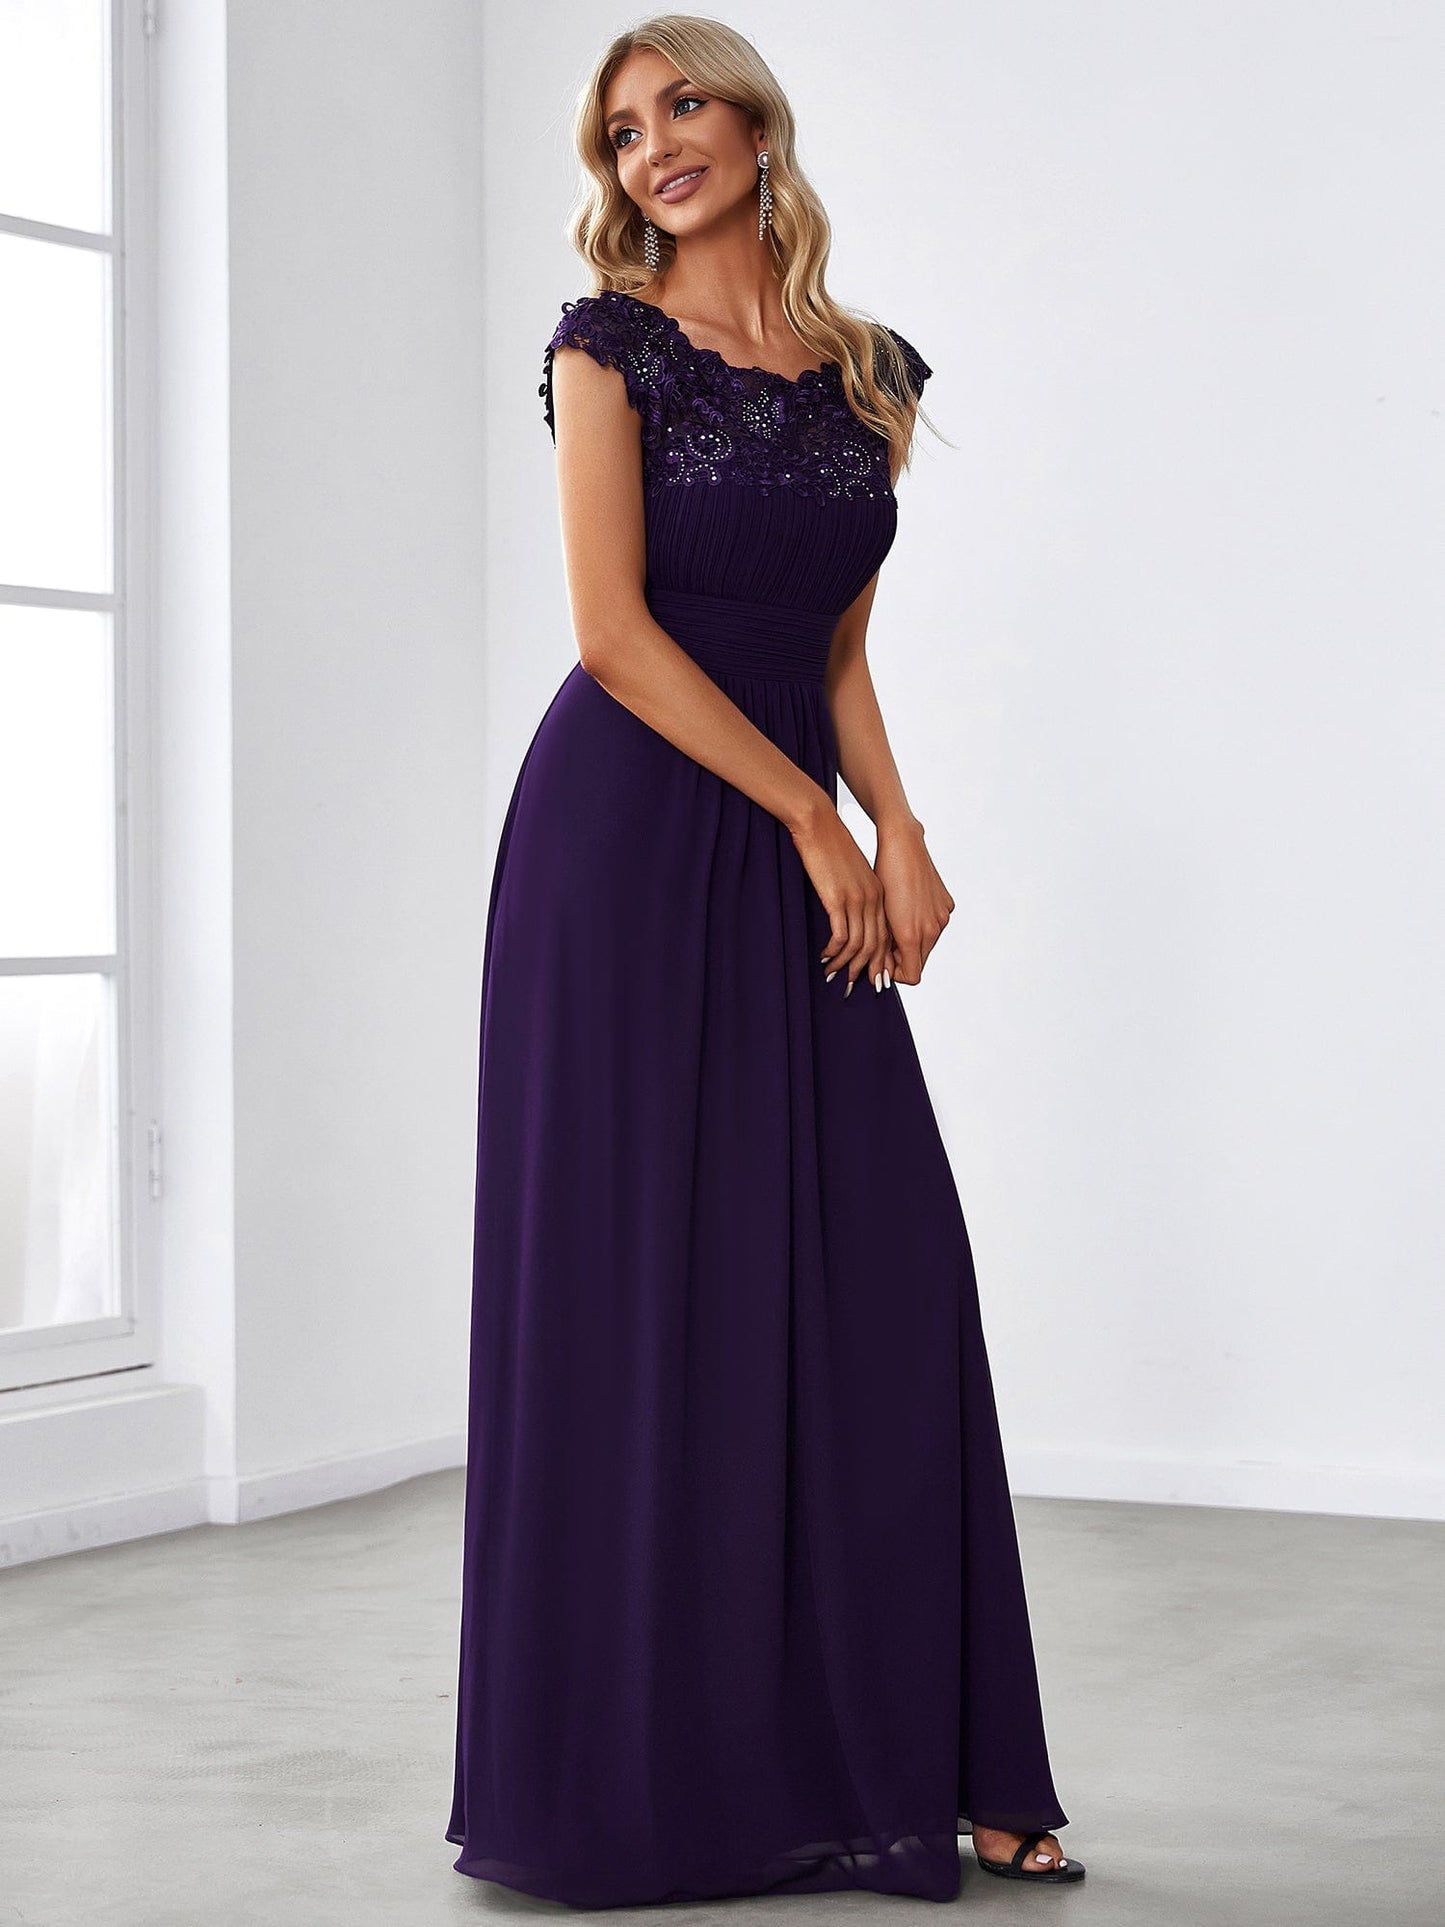 MsDresslyEP Formal Dress Maxi Lace Cap Sleeve Long Formal Evening Dress